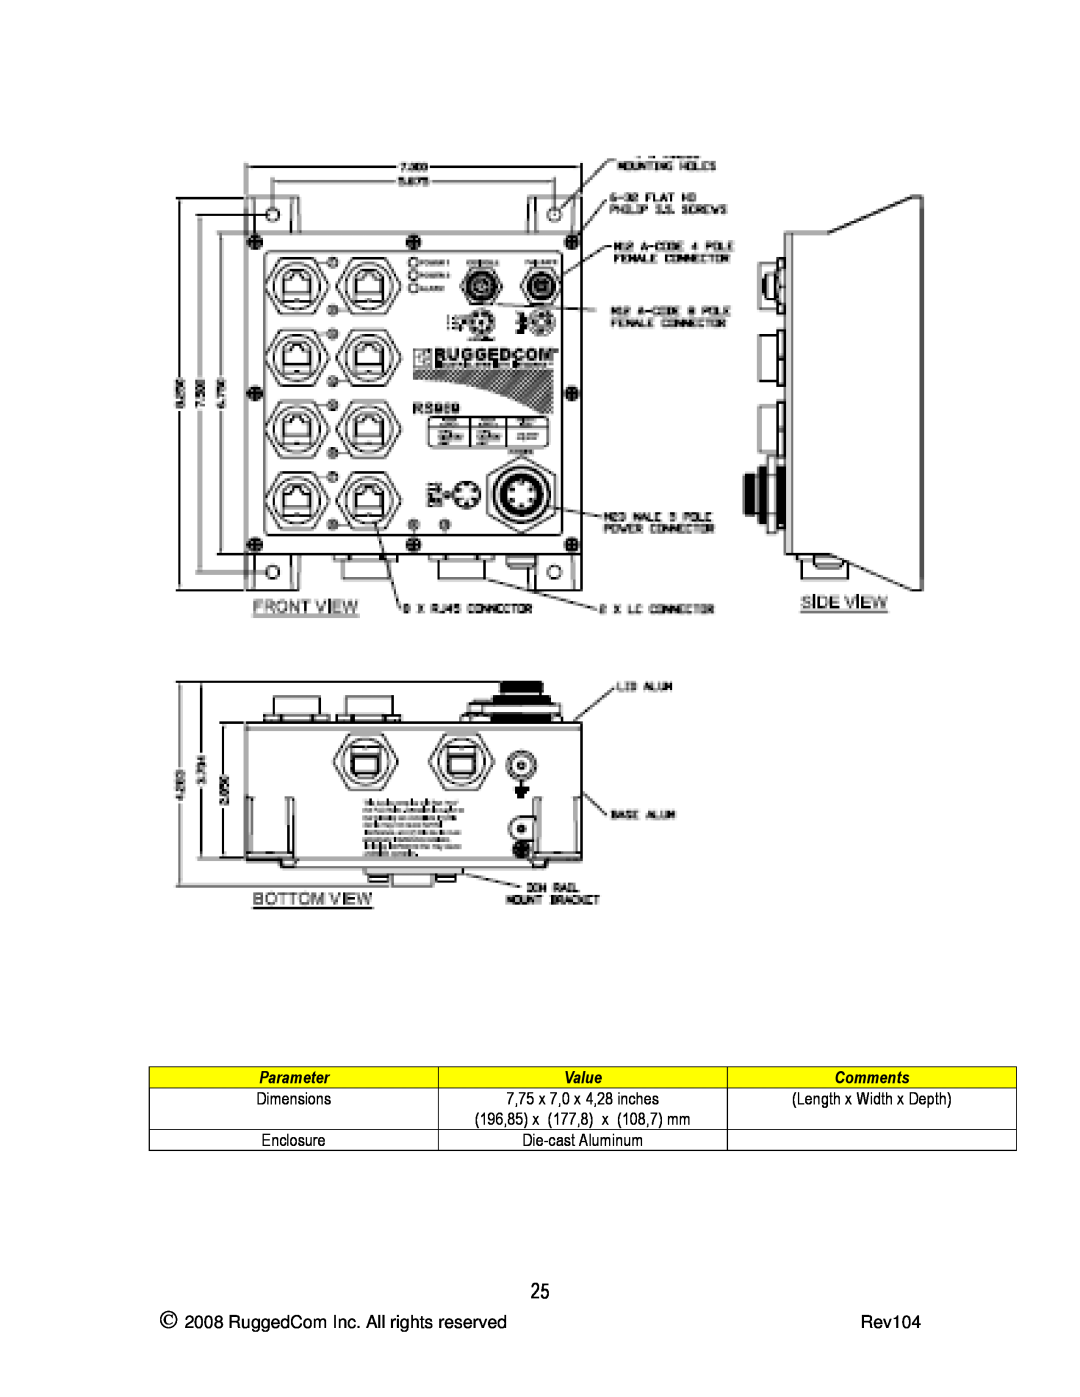 RuggedCom RS969 manual Dimensions, Length x Width x Depth, 196,85 x 177,8 x 108,7 mm, Enclosure, Die-cast Aluminum 